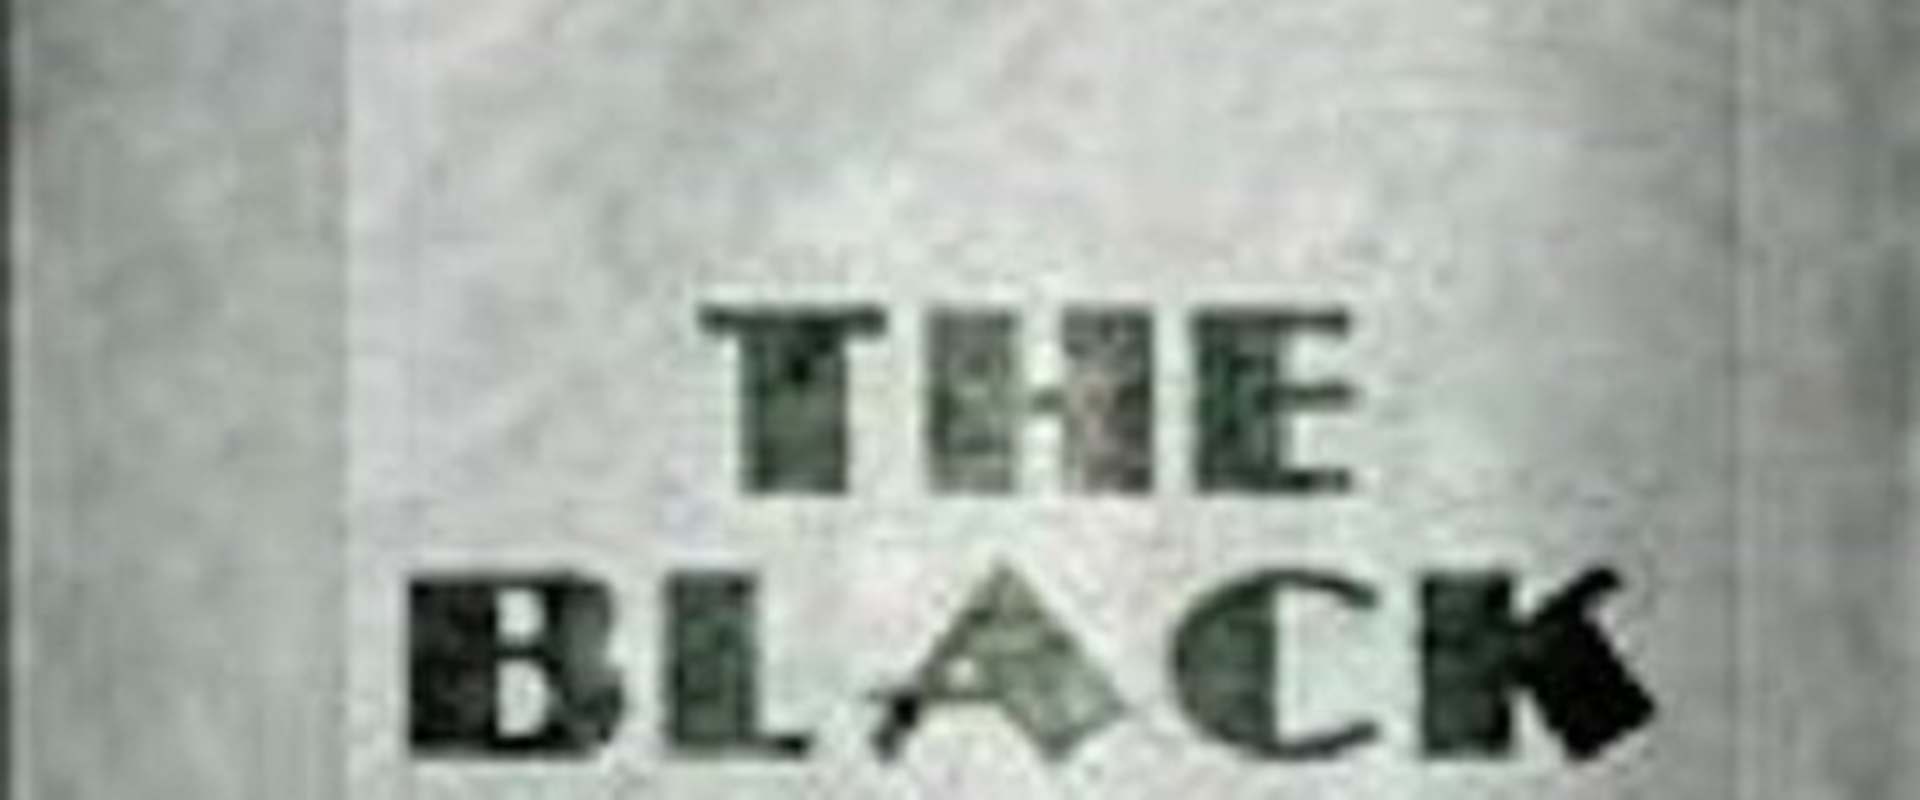 The Black Imp background 1